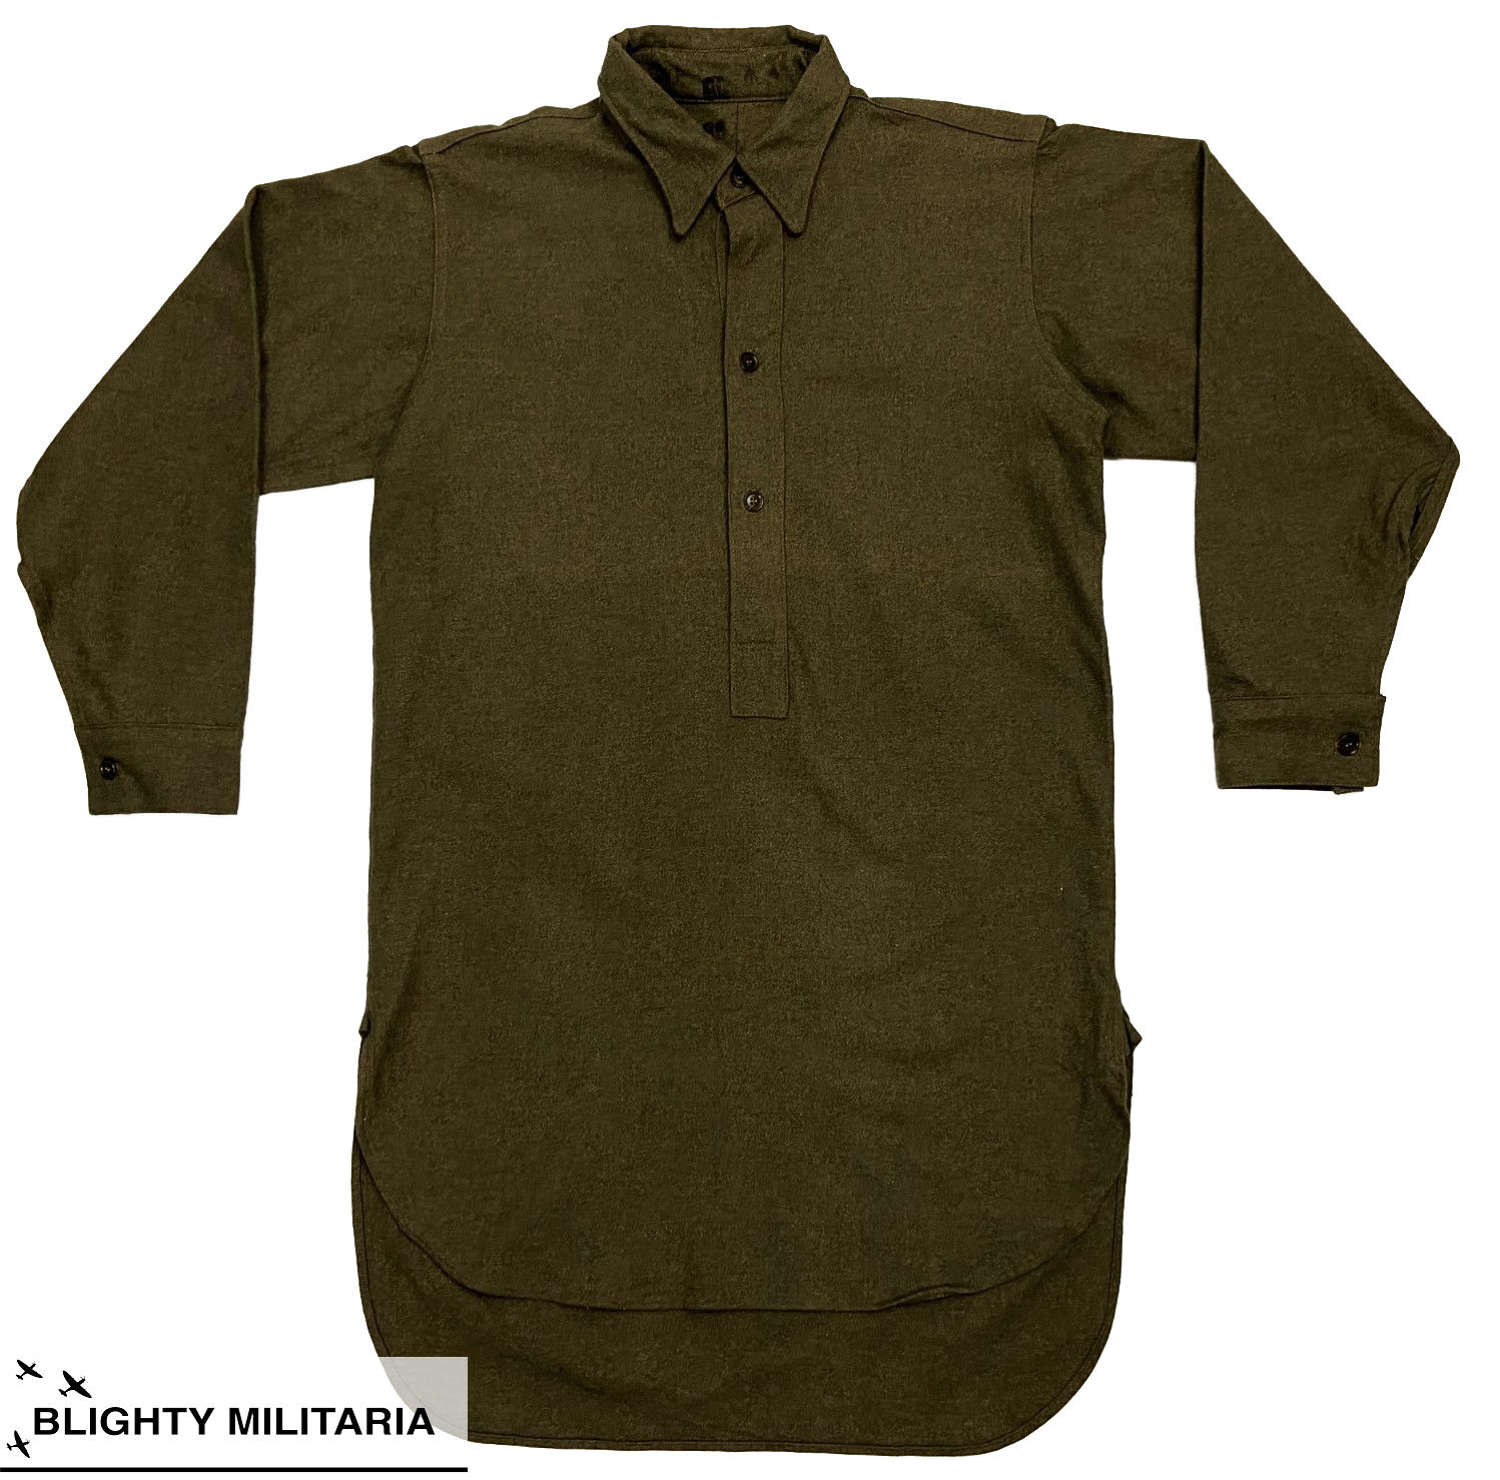 Original British Army Ordinary Ranks Collared Shirt - Size 4